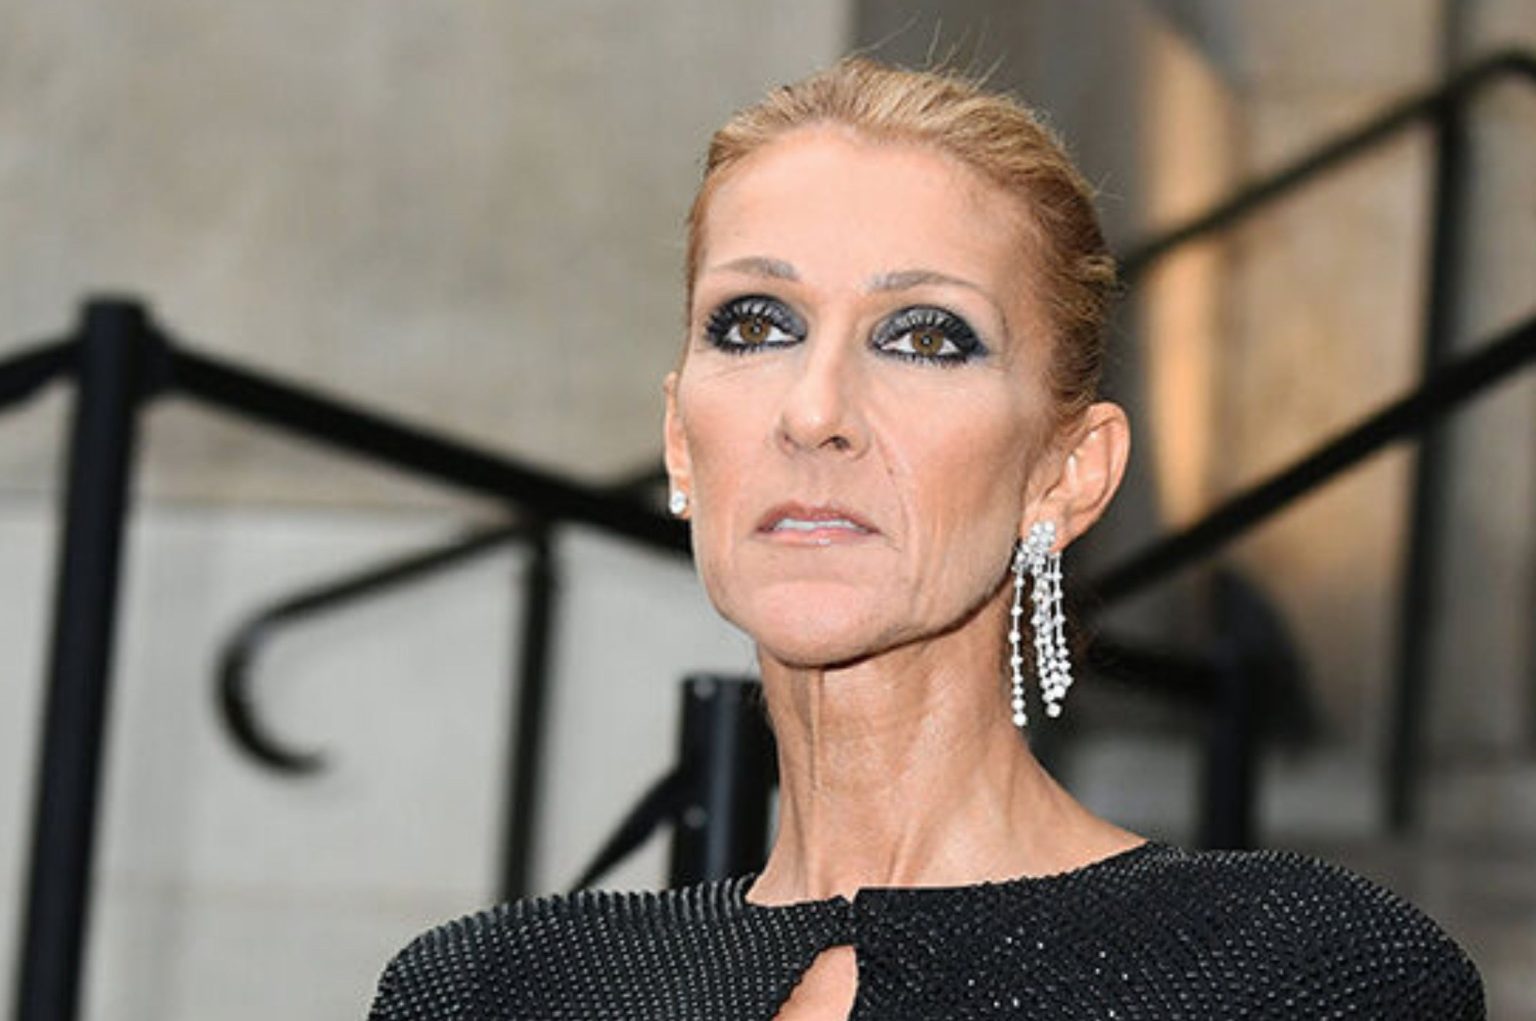 Celine Dion's Plastic Surgery - What We Know So Far - Plastic Surgery Stars